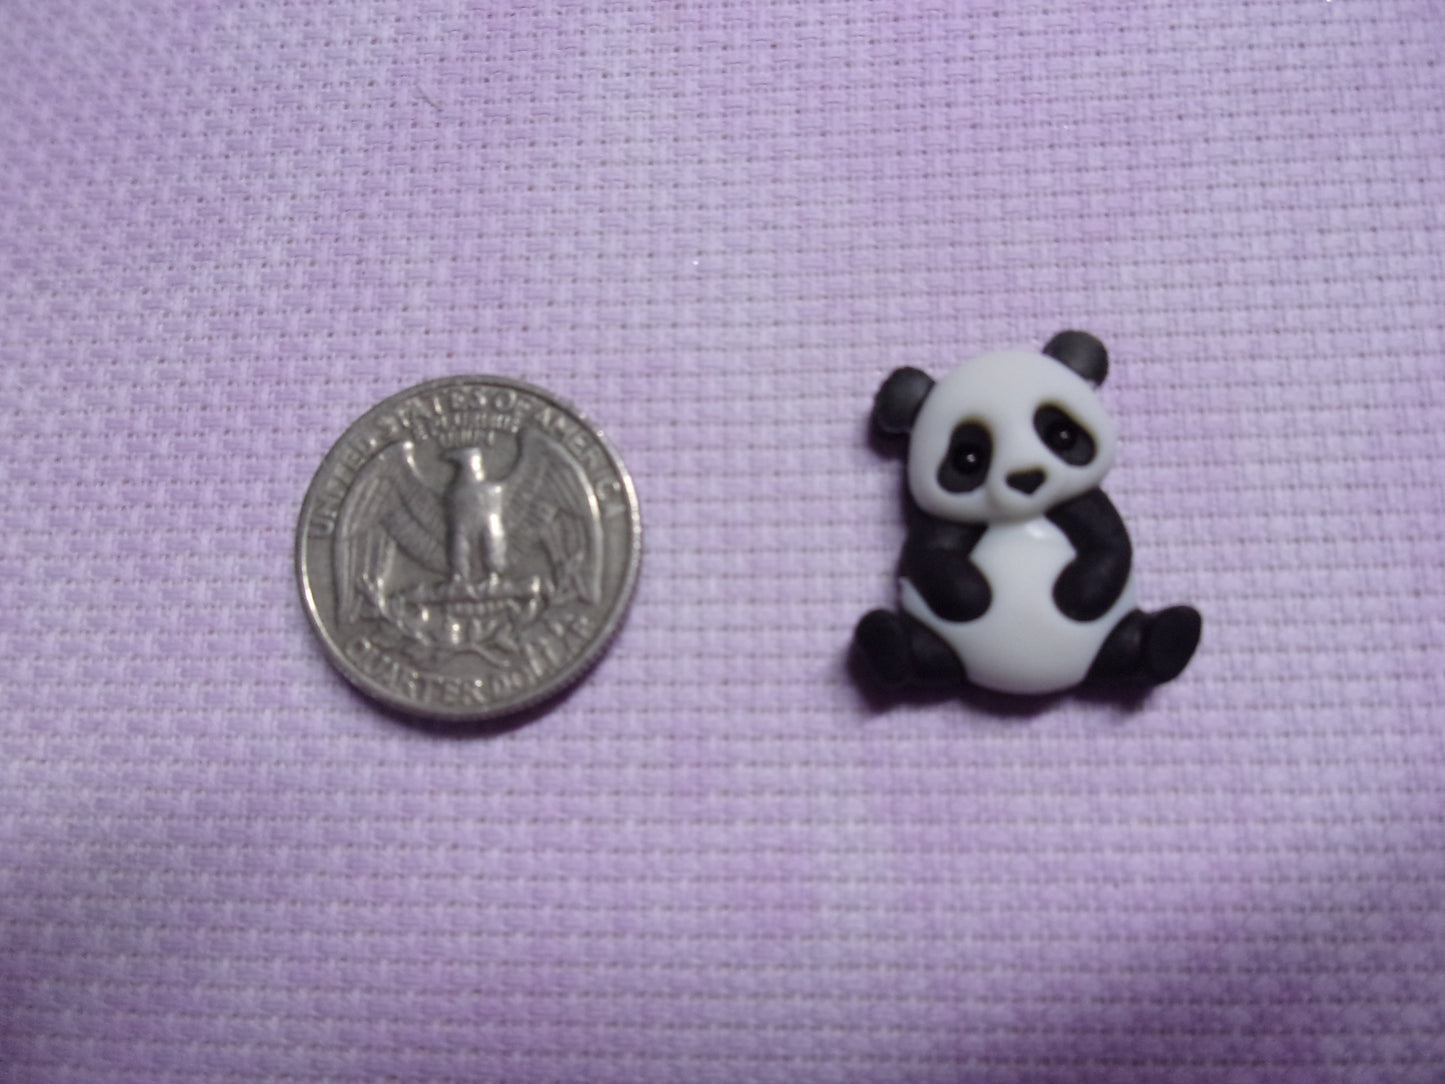 Panda needle minders